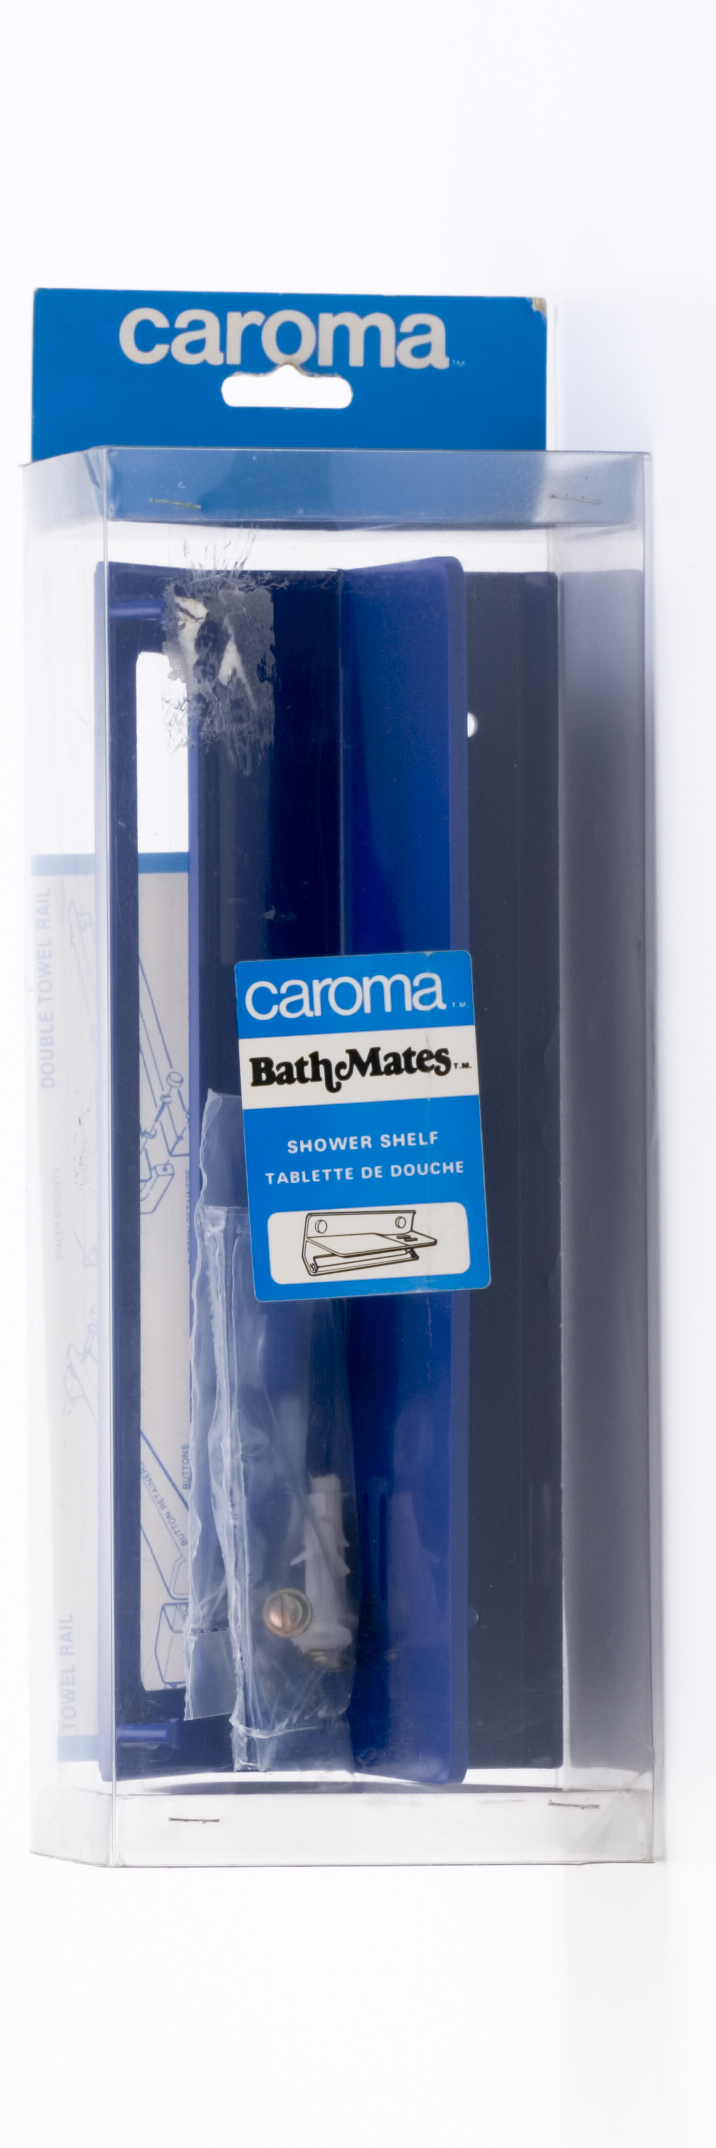 Caroma 'Bathmates' bathroom accessories